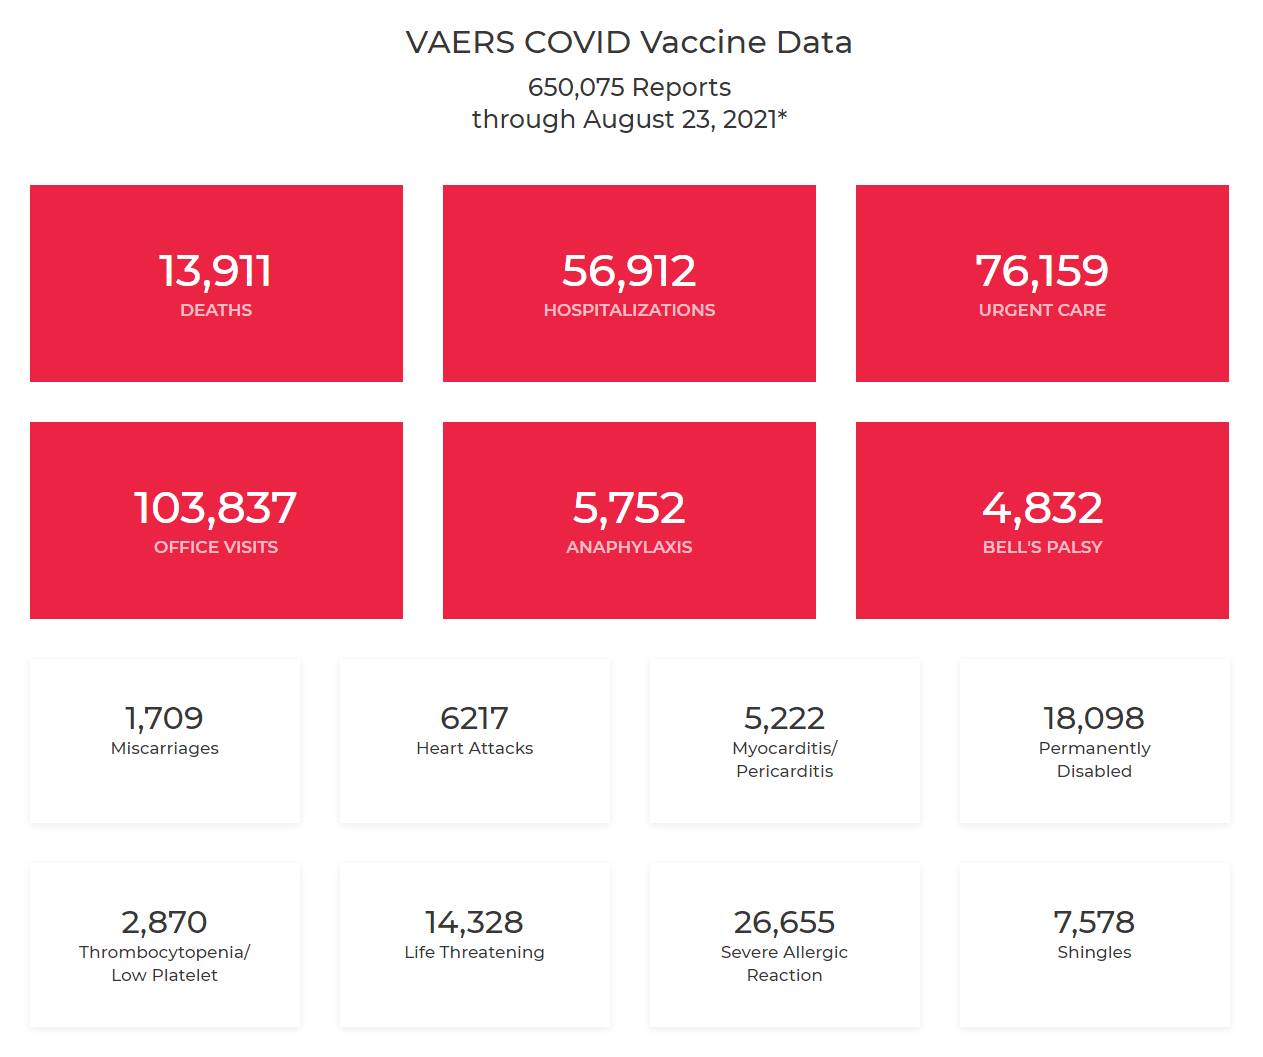 VAERS COVID Vaccine Data through August 23, 2021